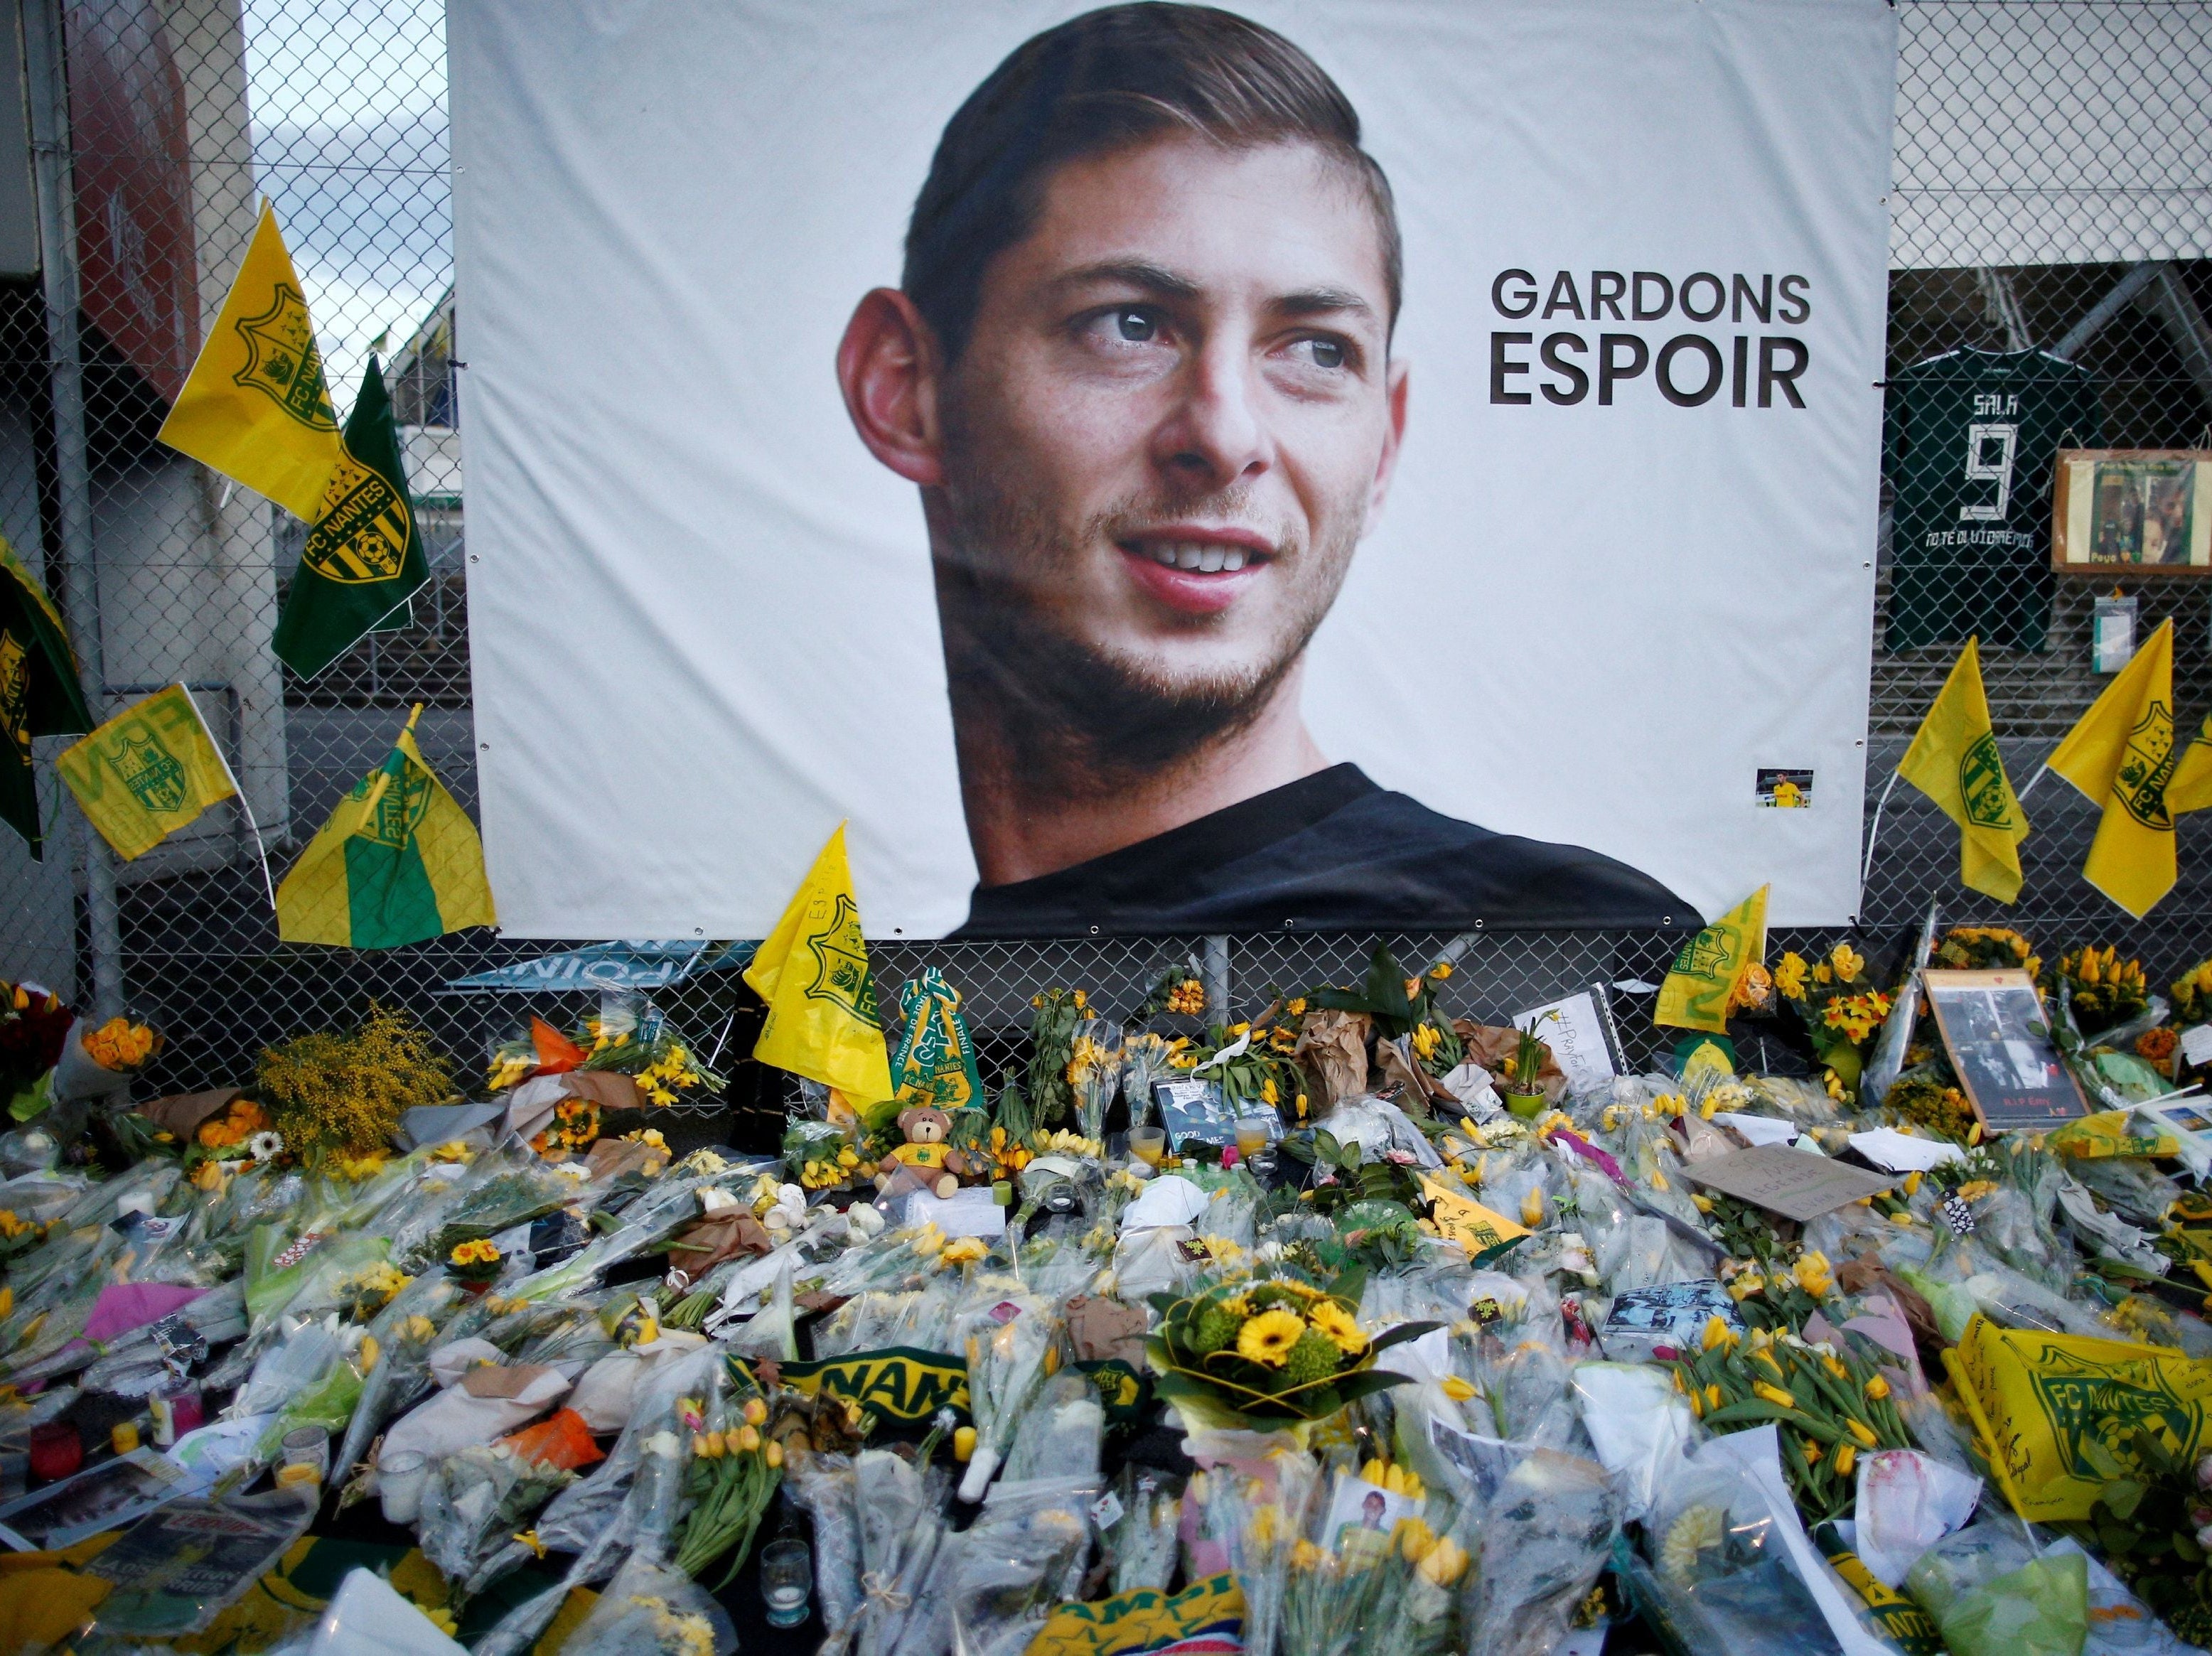 Tributes left outside the Stade de la Beaujoire in Nantes for Emiliano Sala